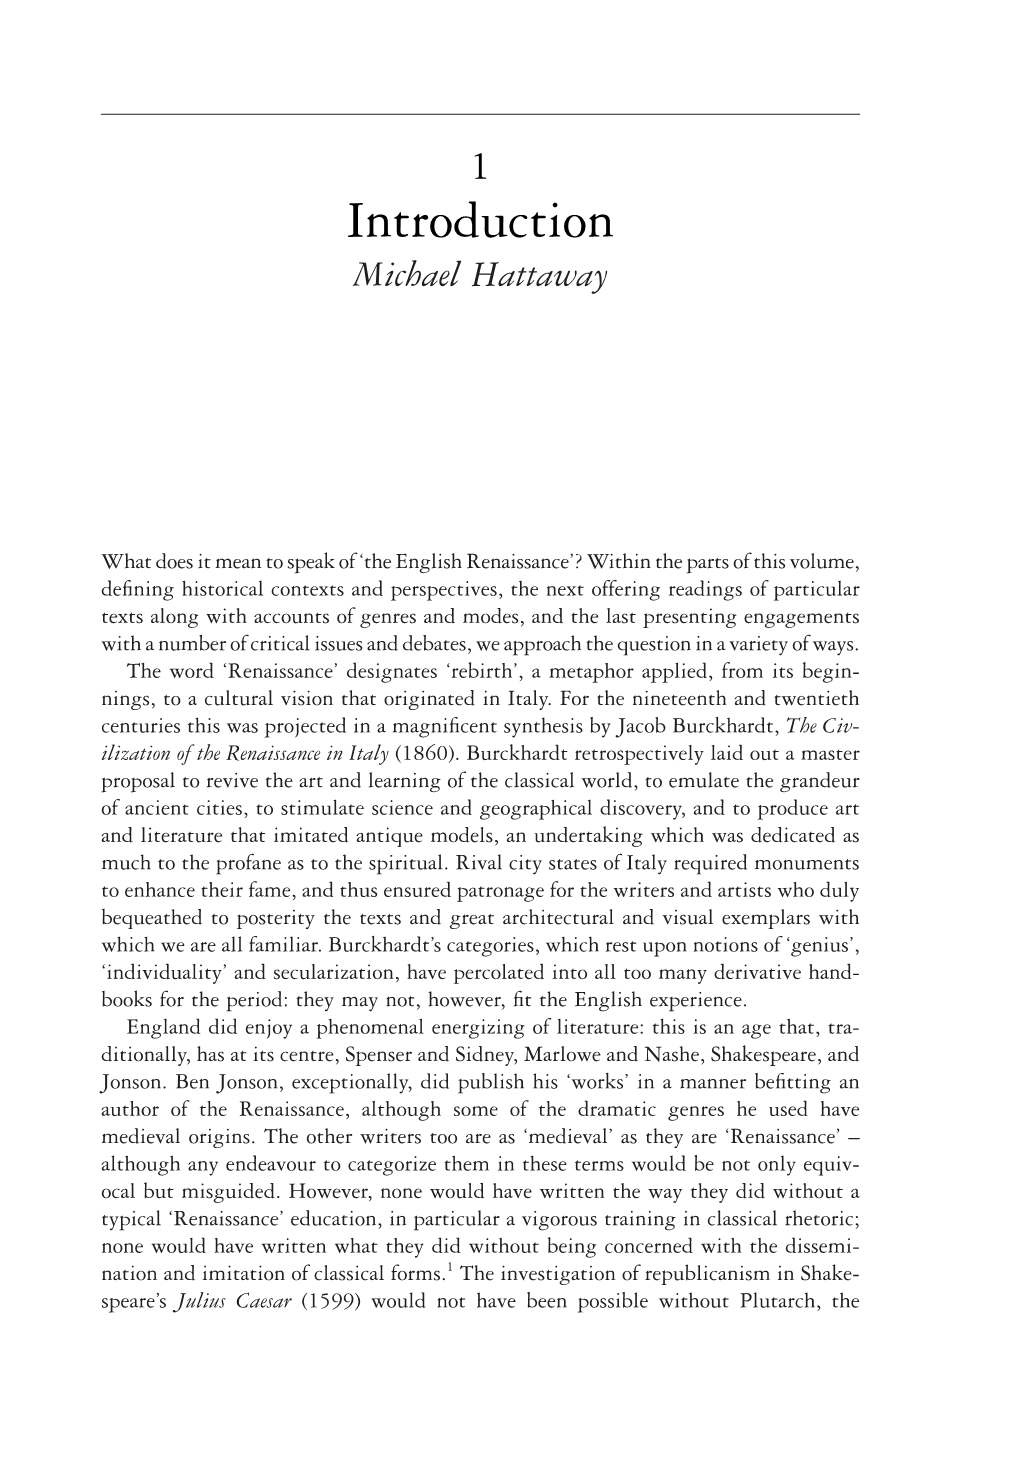 Introduction Michael Hattaway